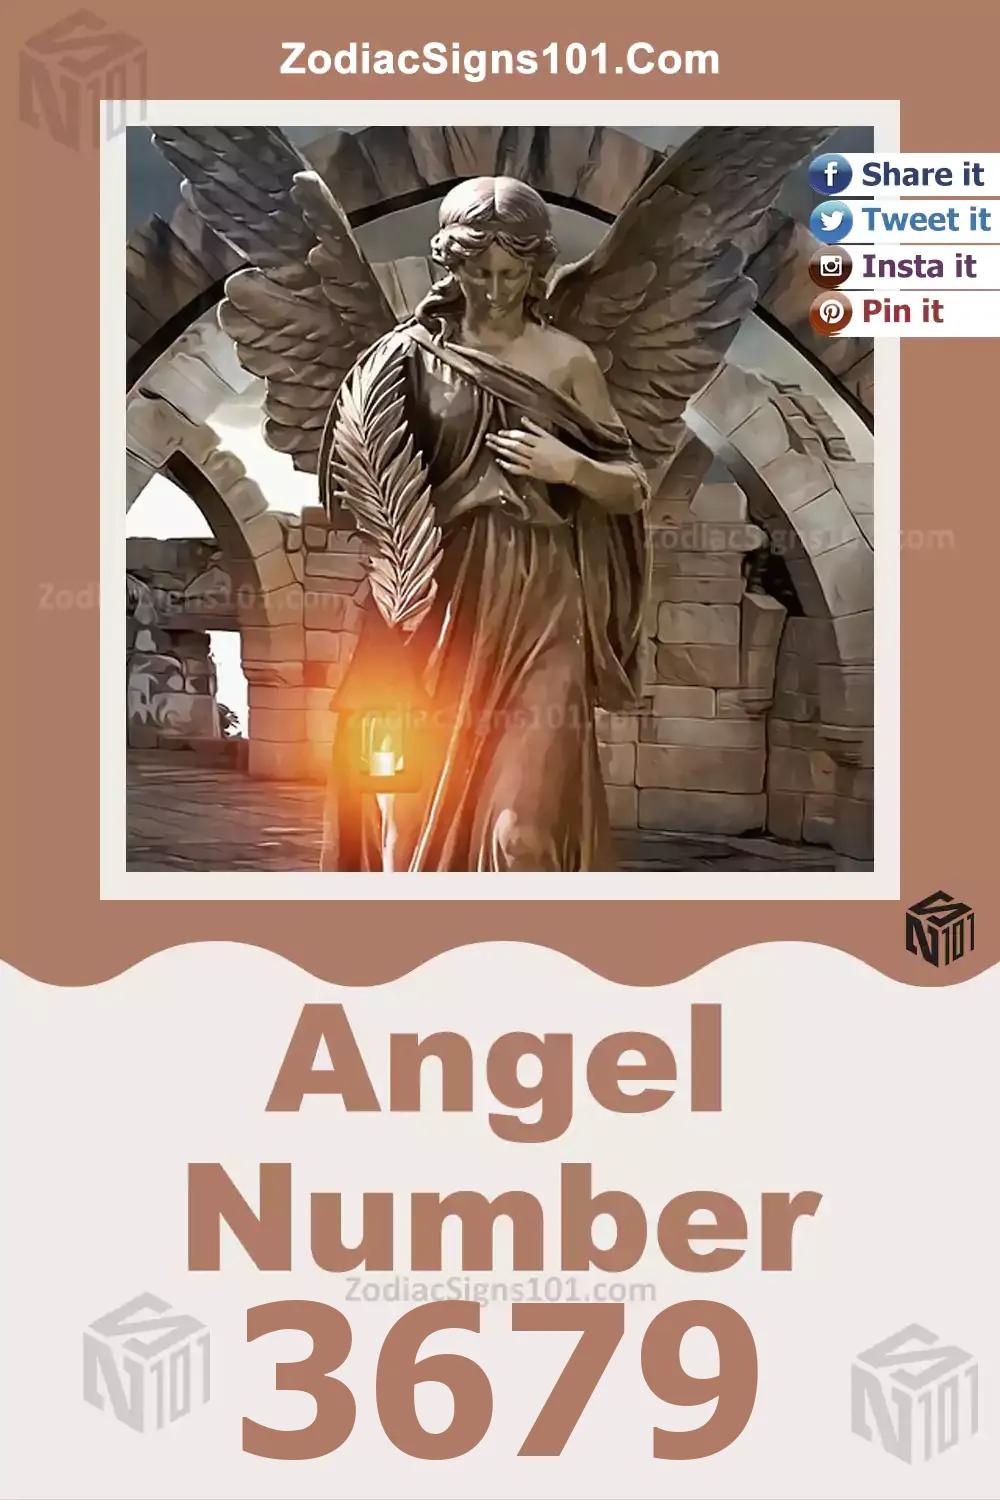 3679-Angel-Number-Meaning.jpg